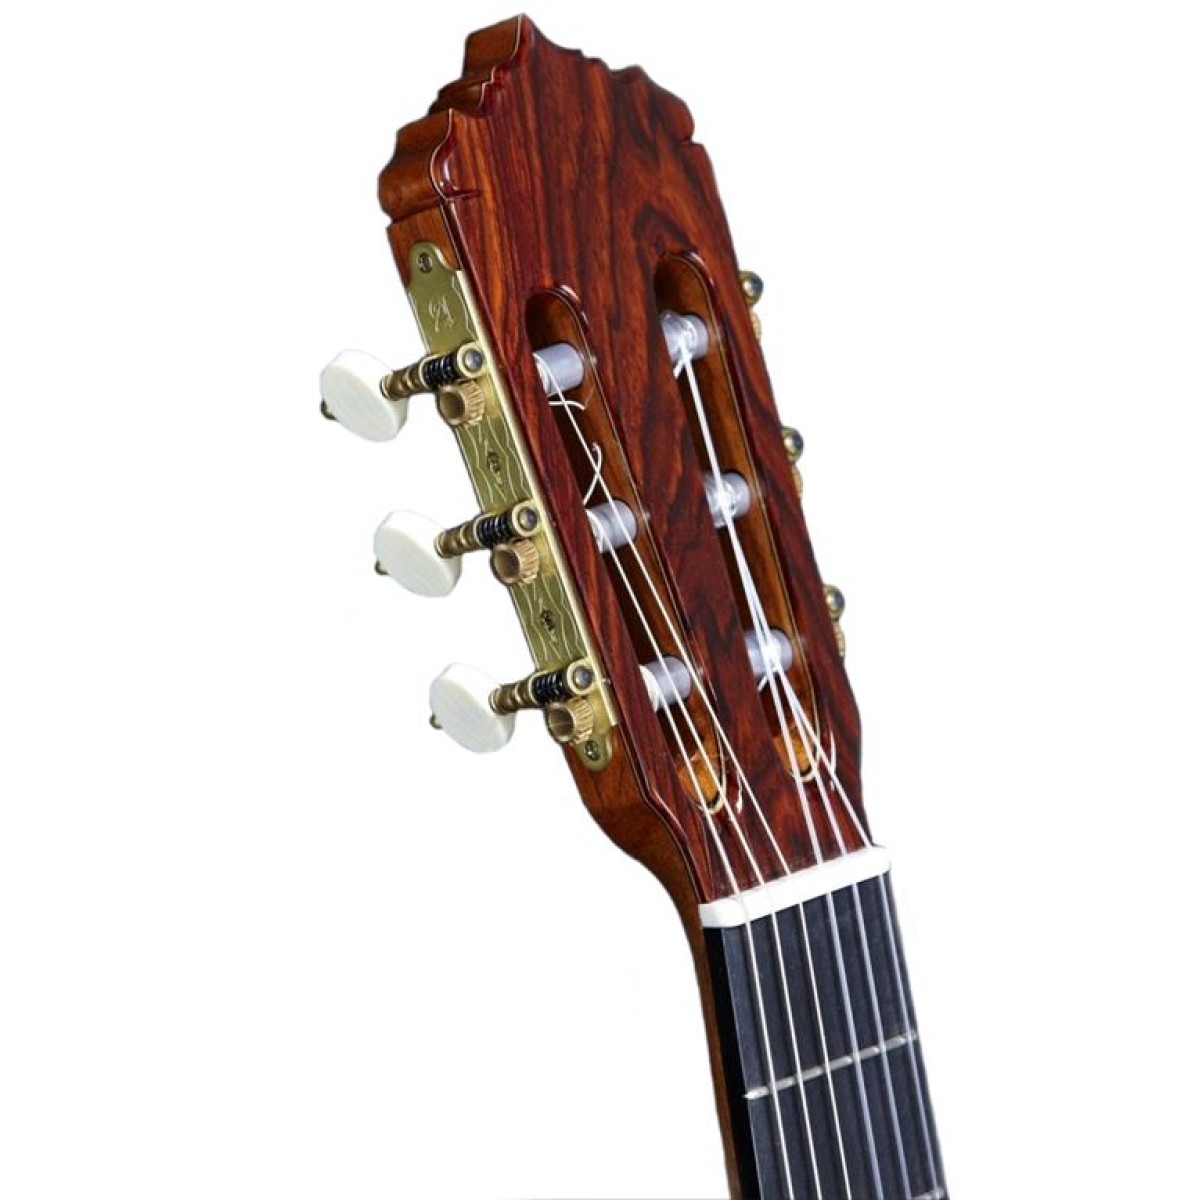 ALHAMBRA Linea Profesional Κλασική κιθάρα 4/4 με Bαλίτσα Alhambra 9650